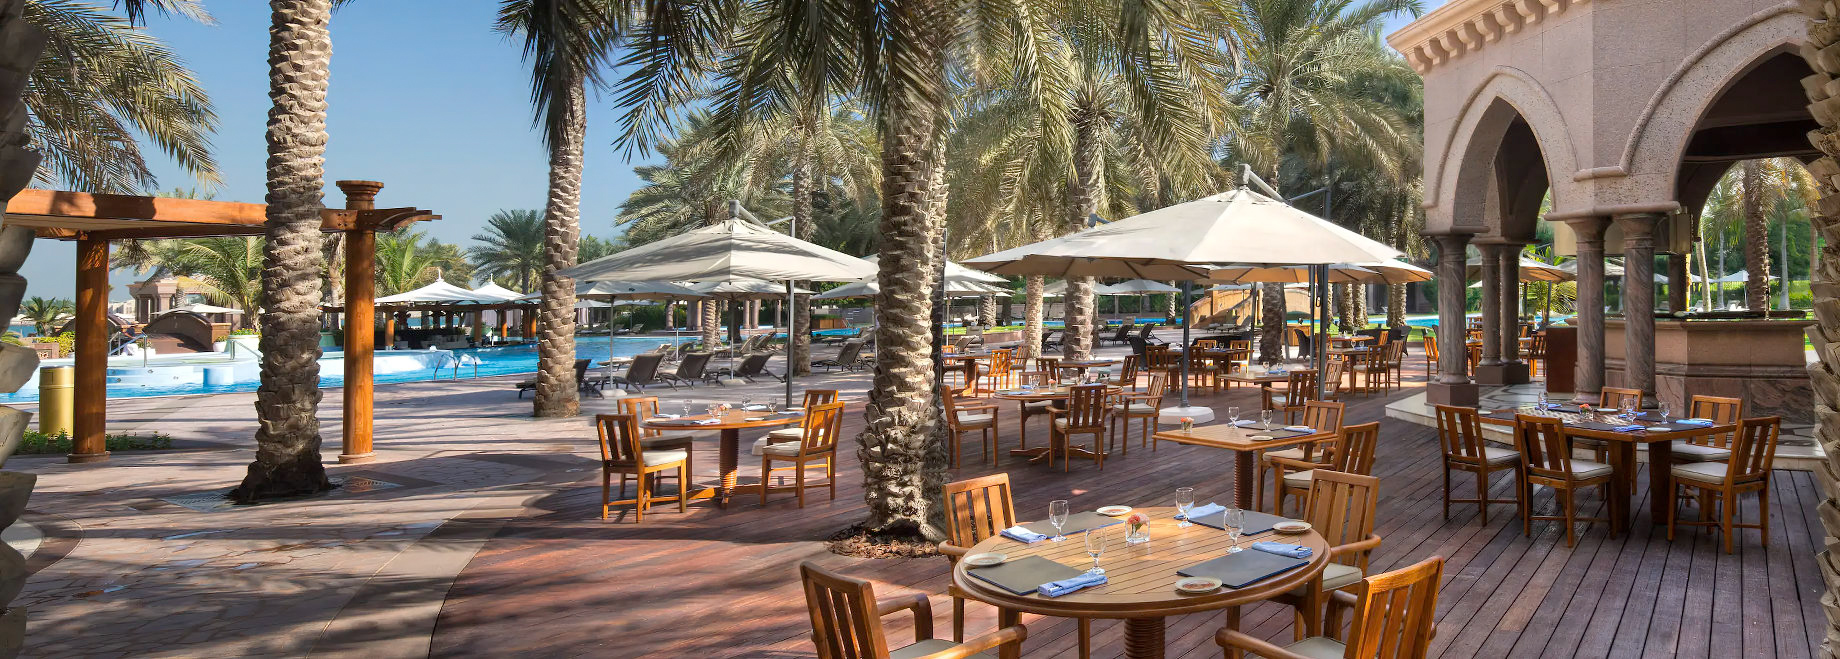 Emirates Palace Abu Dhabi Hotel - Abu Dhabi, UAE - Dining Las Brisas Patio